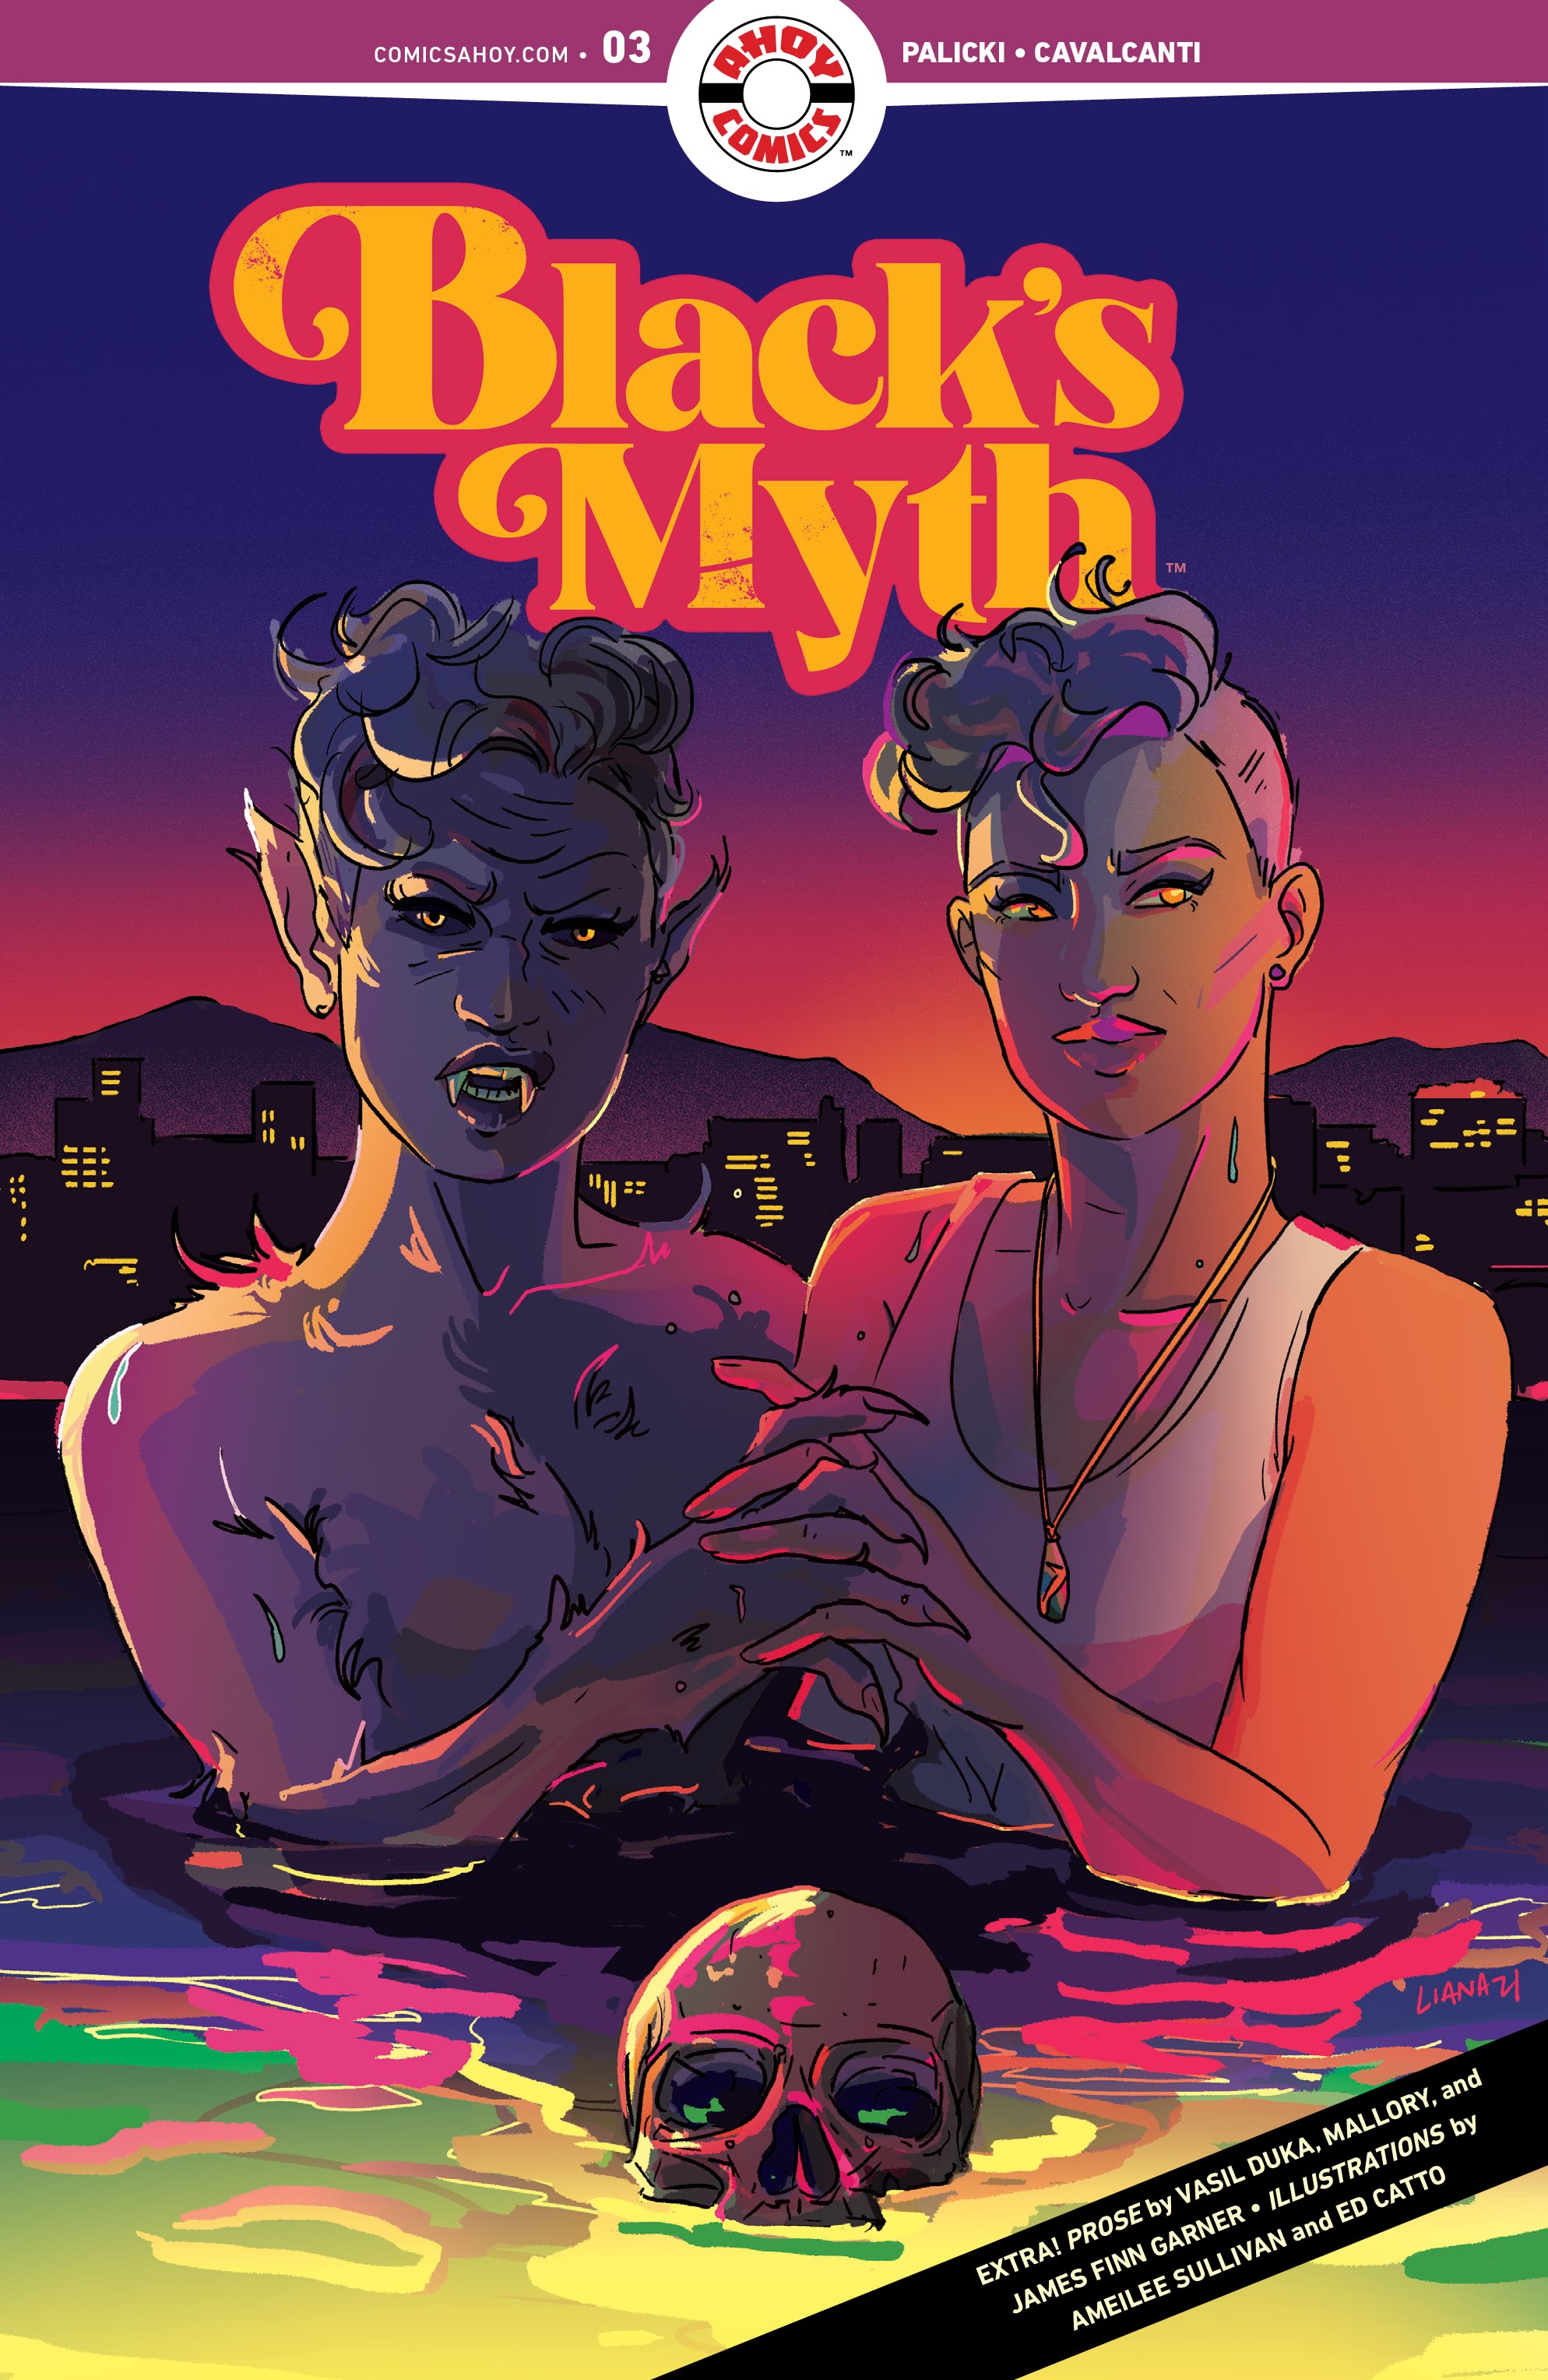 Read online Black's Myth comic -  Issue #3 - 1